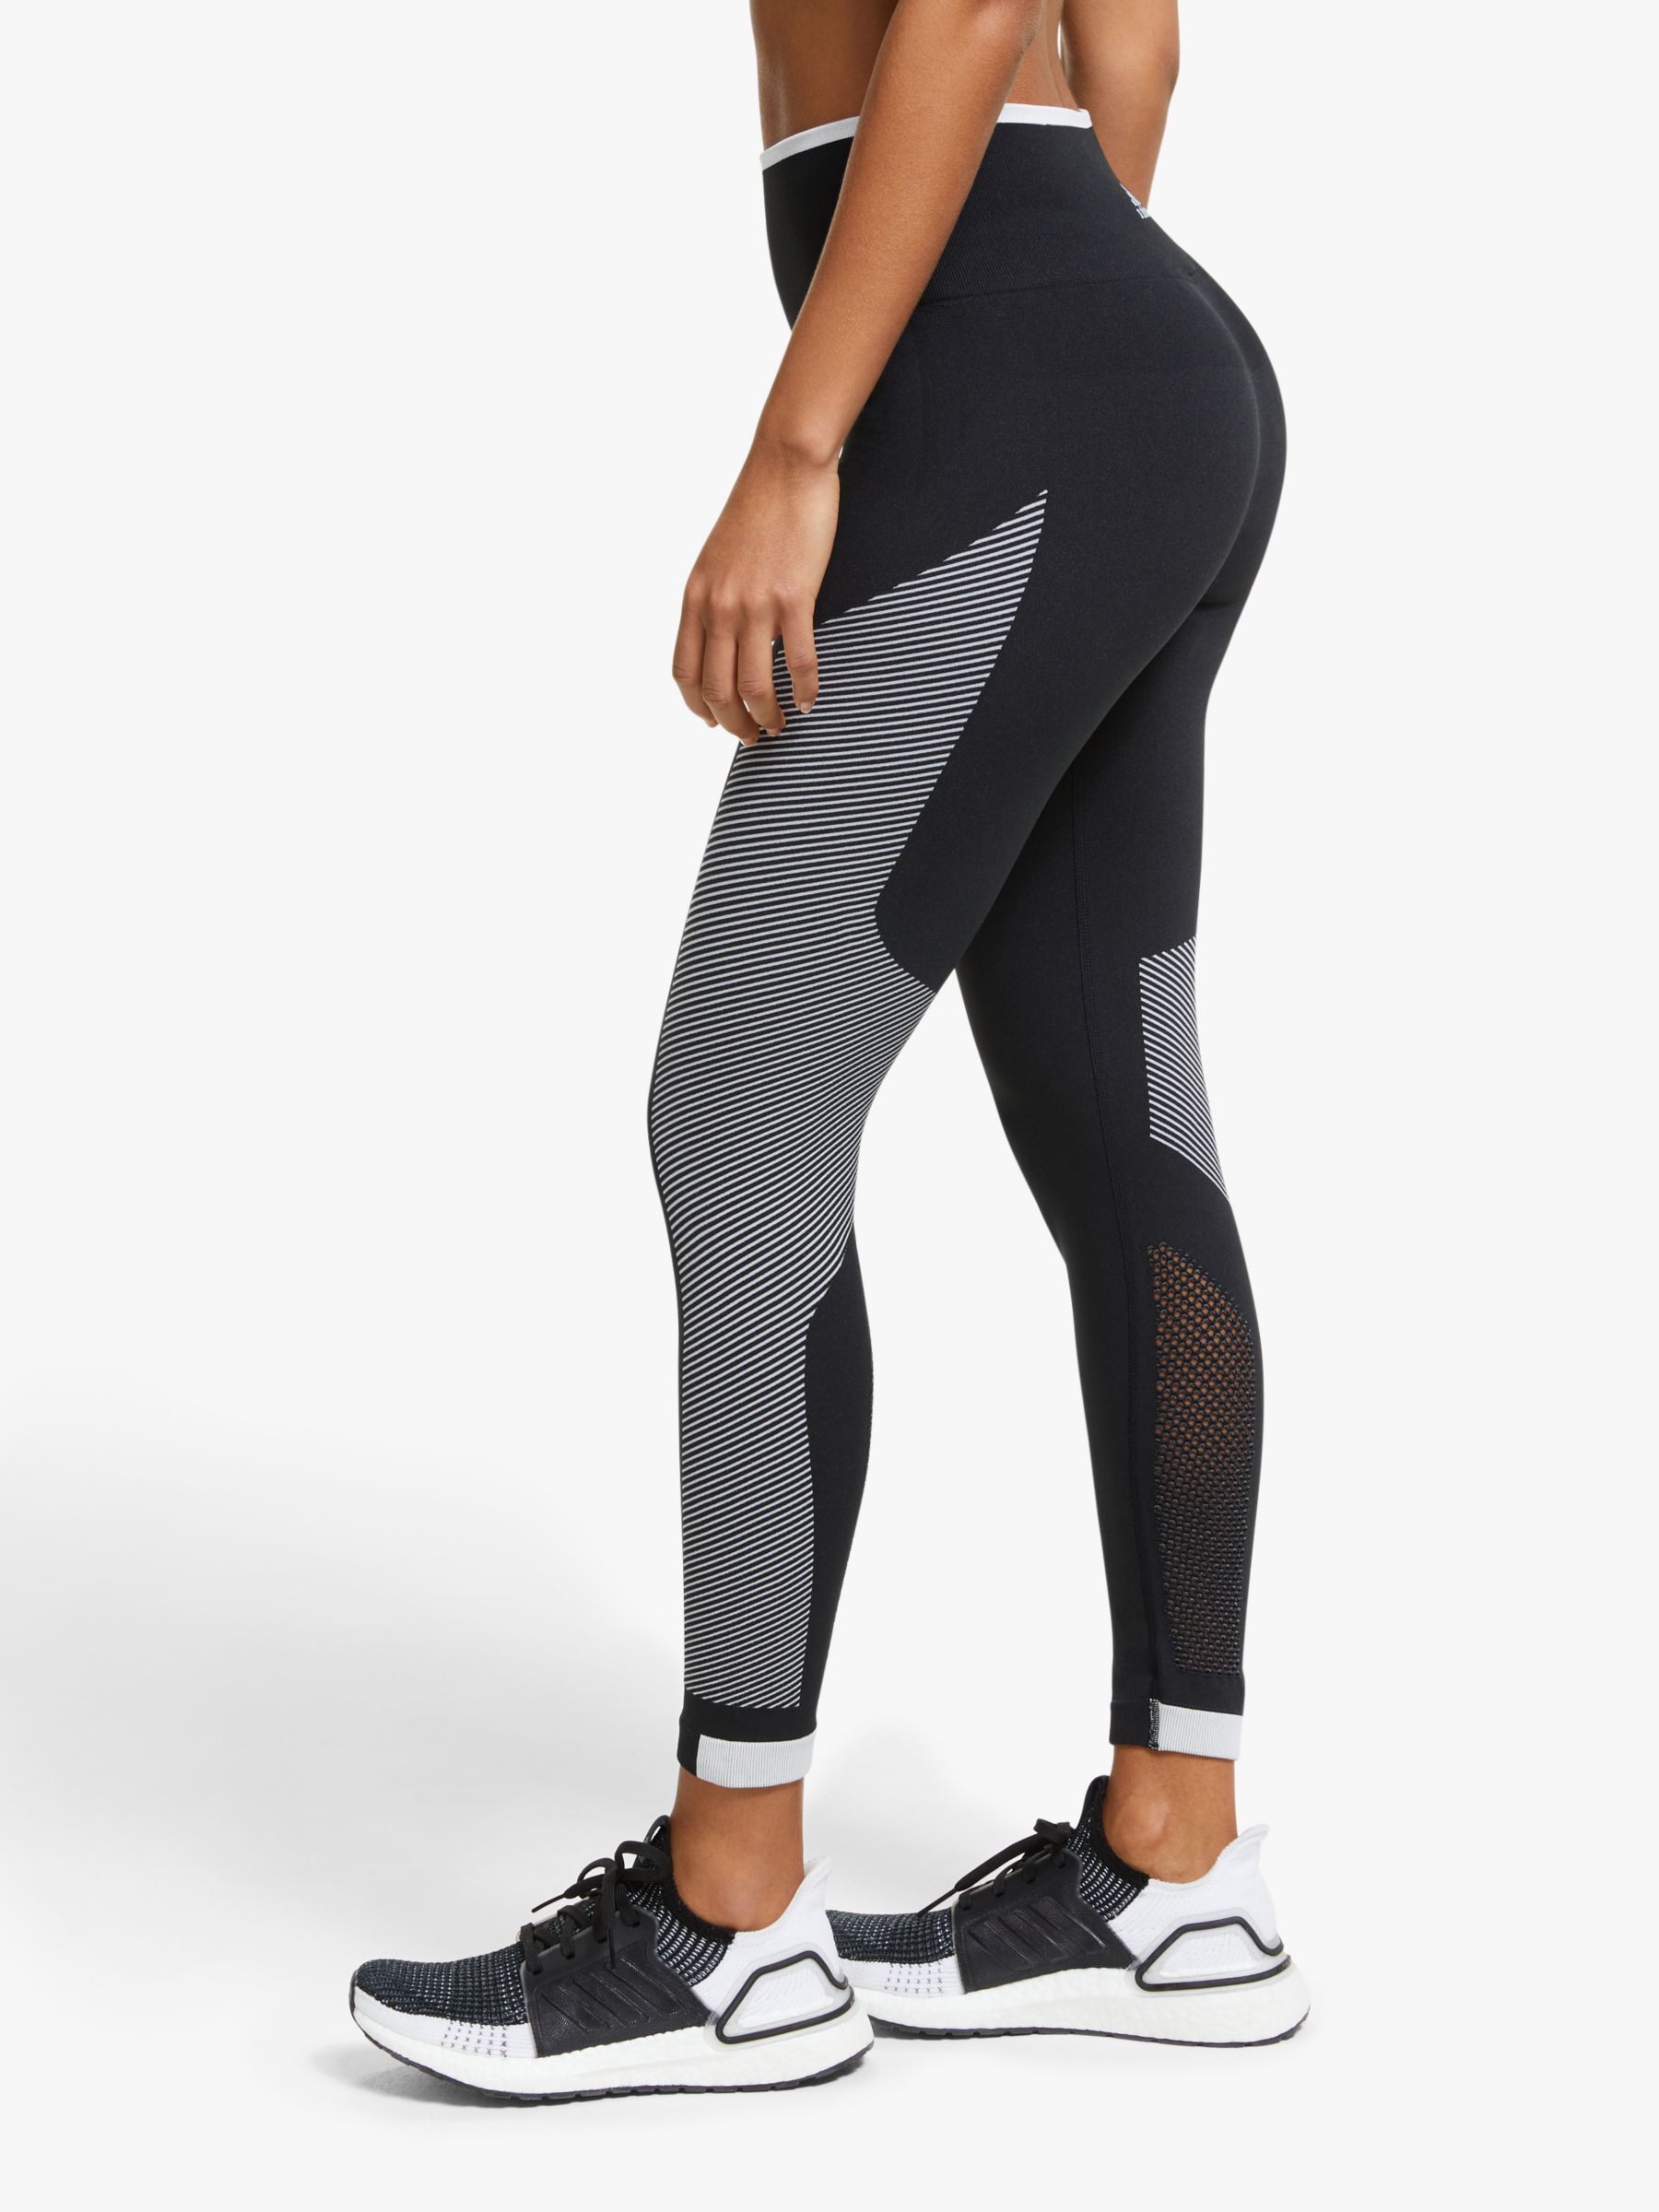 adidas believe this primeknit flw leggings